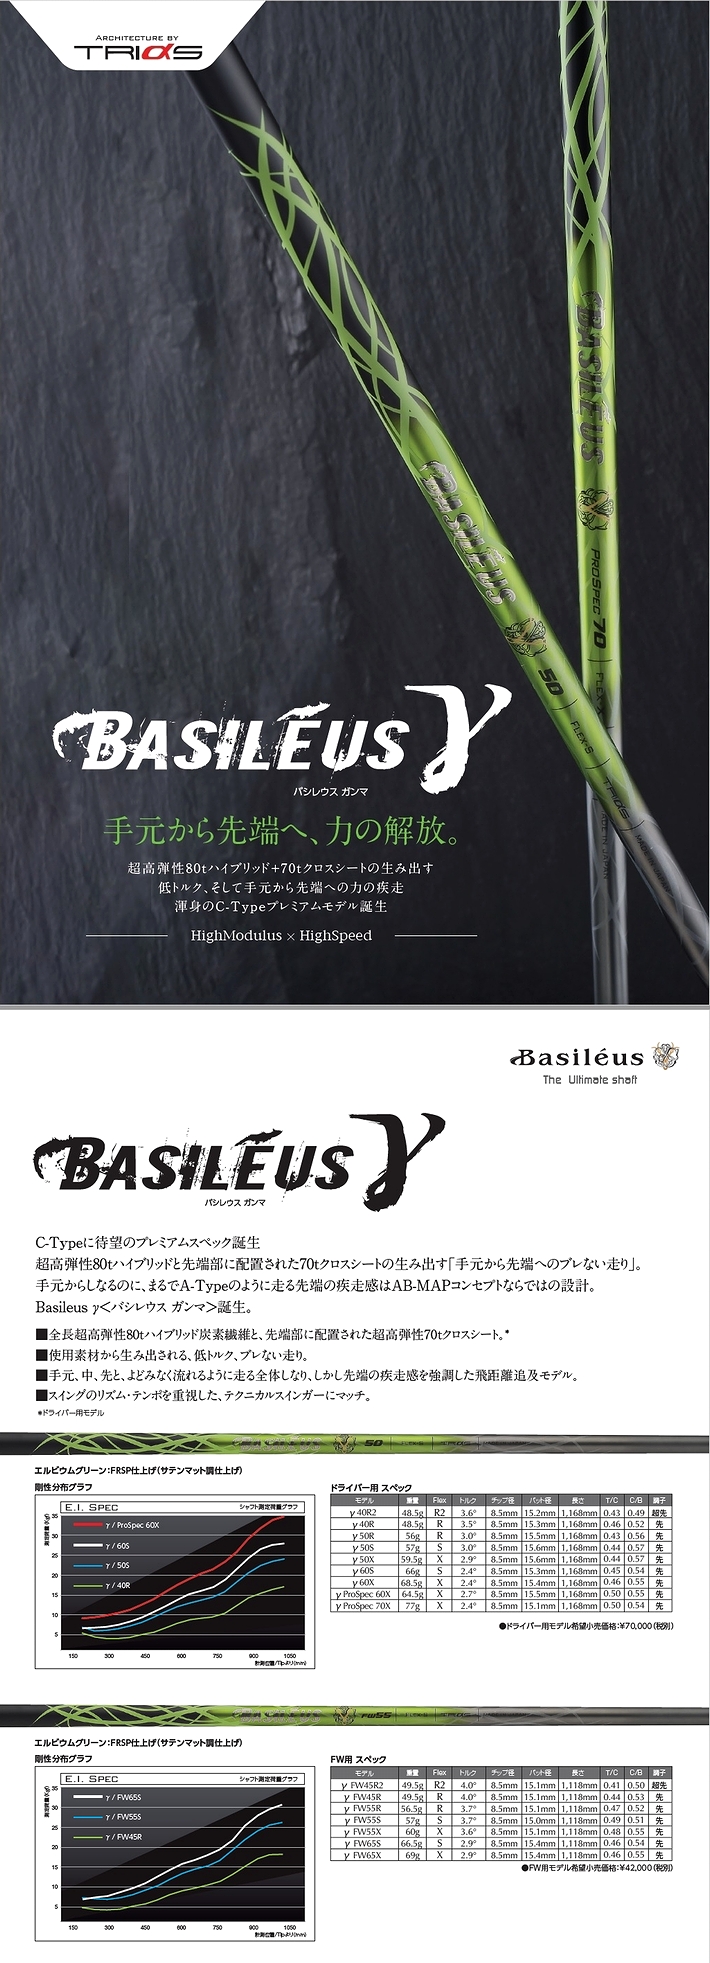 Basileus γ　ブログ　3